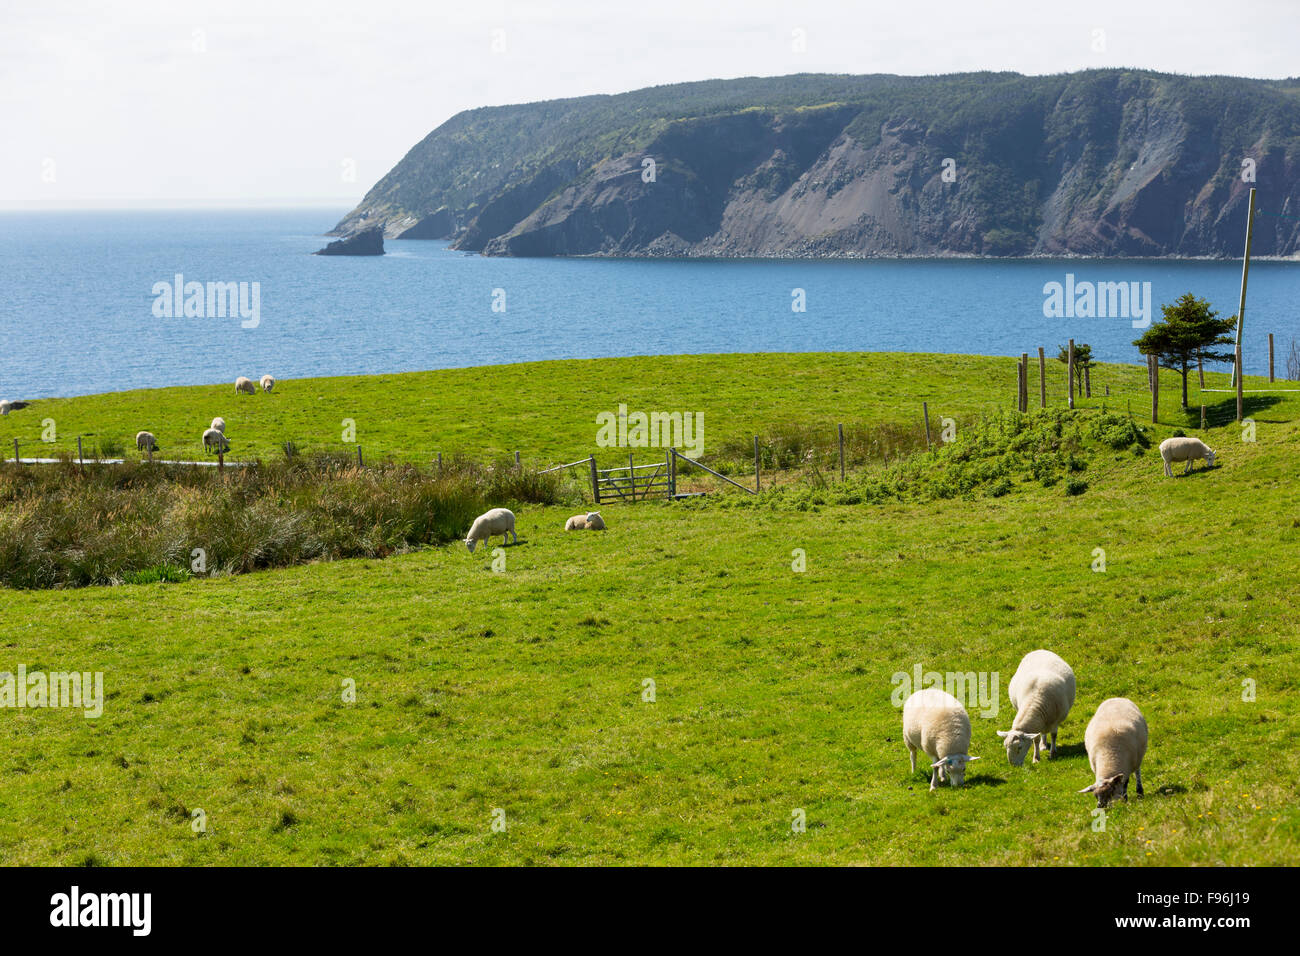 Sheep grazing, Branch, Newfoundland, Canada Stock Photo